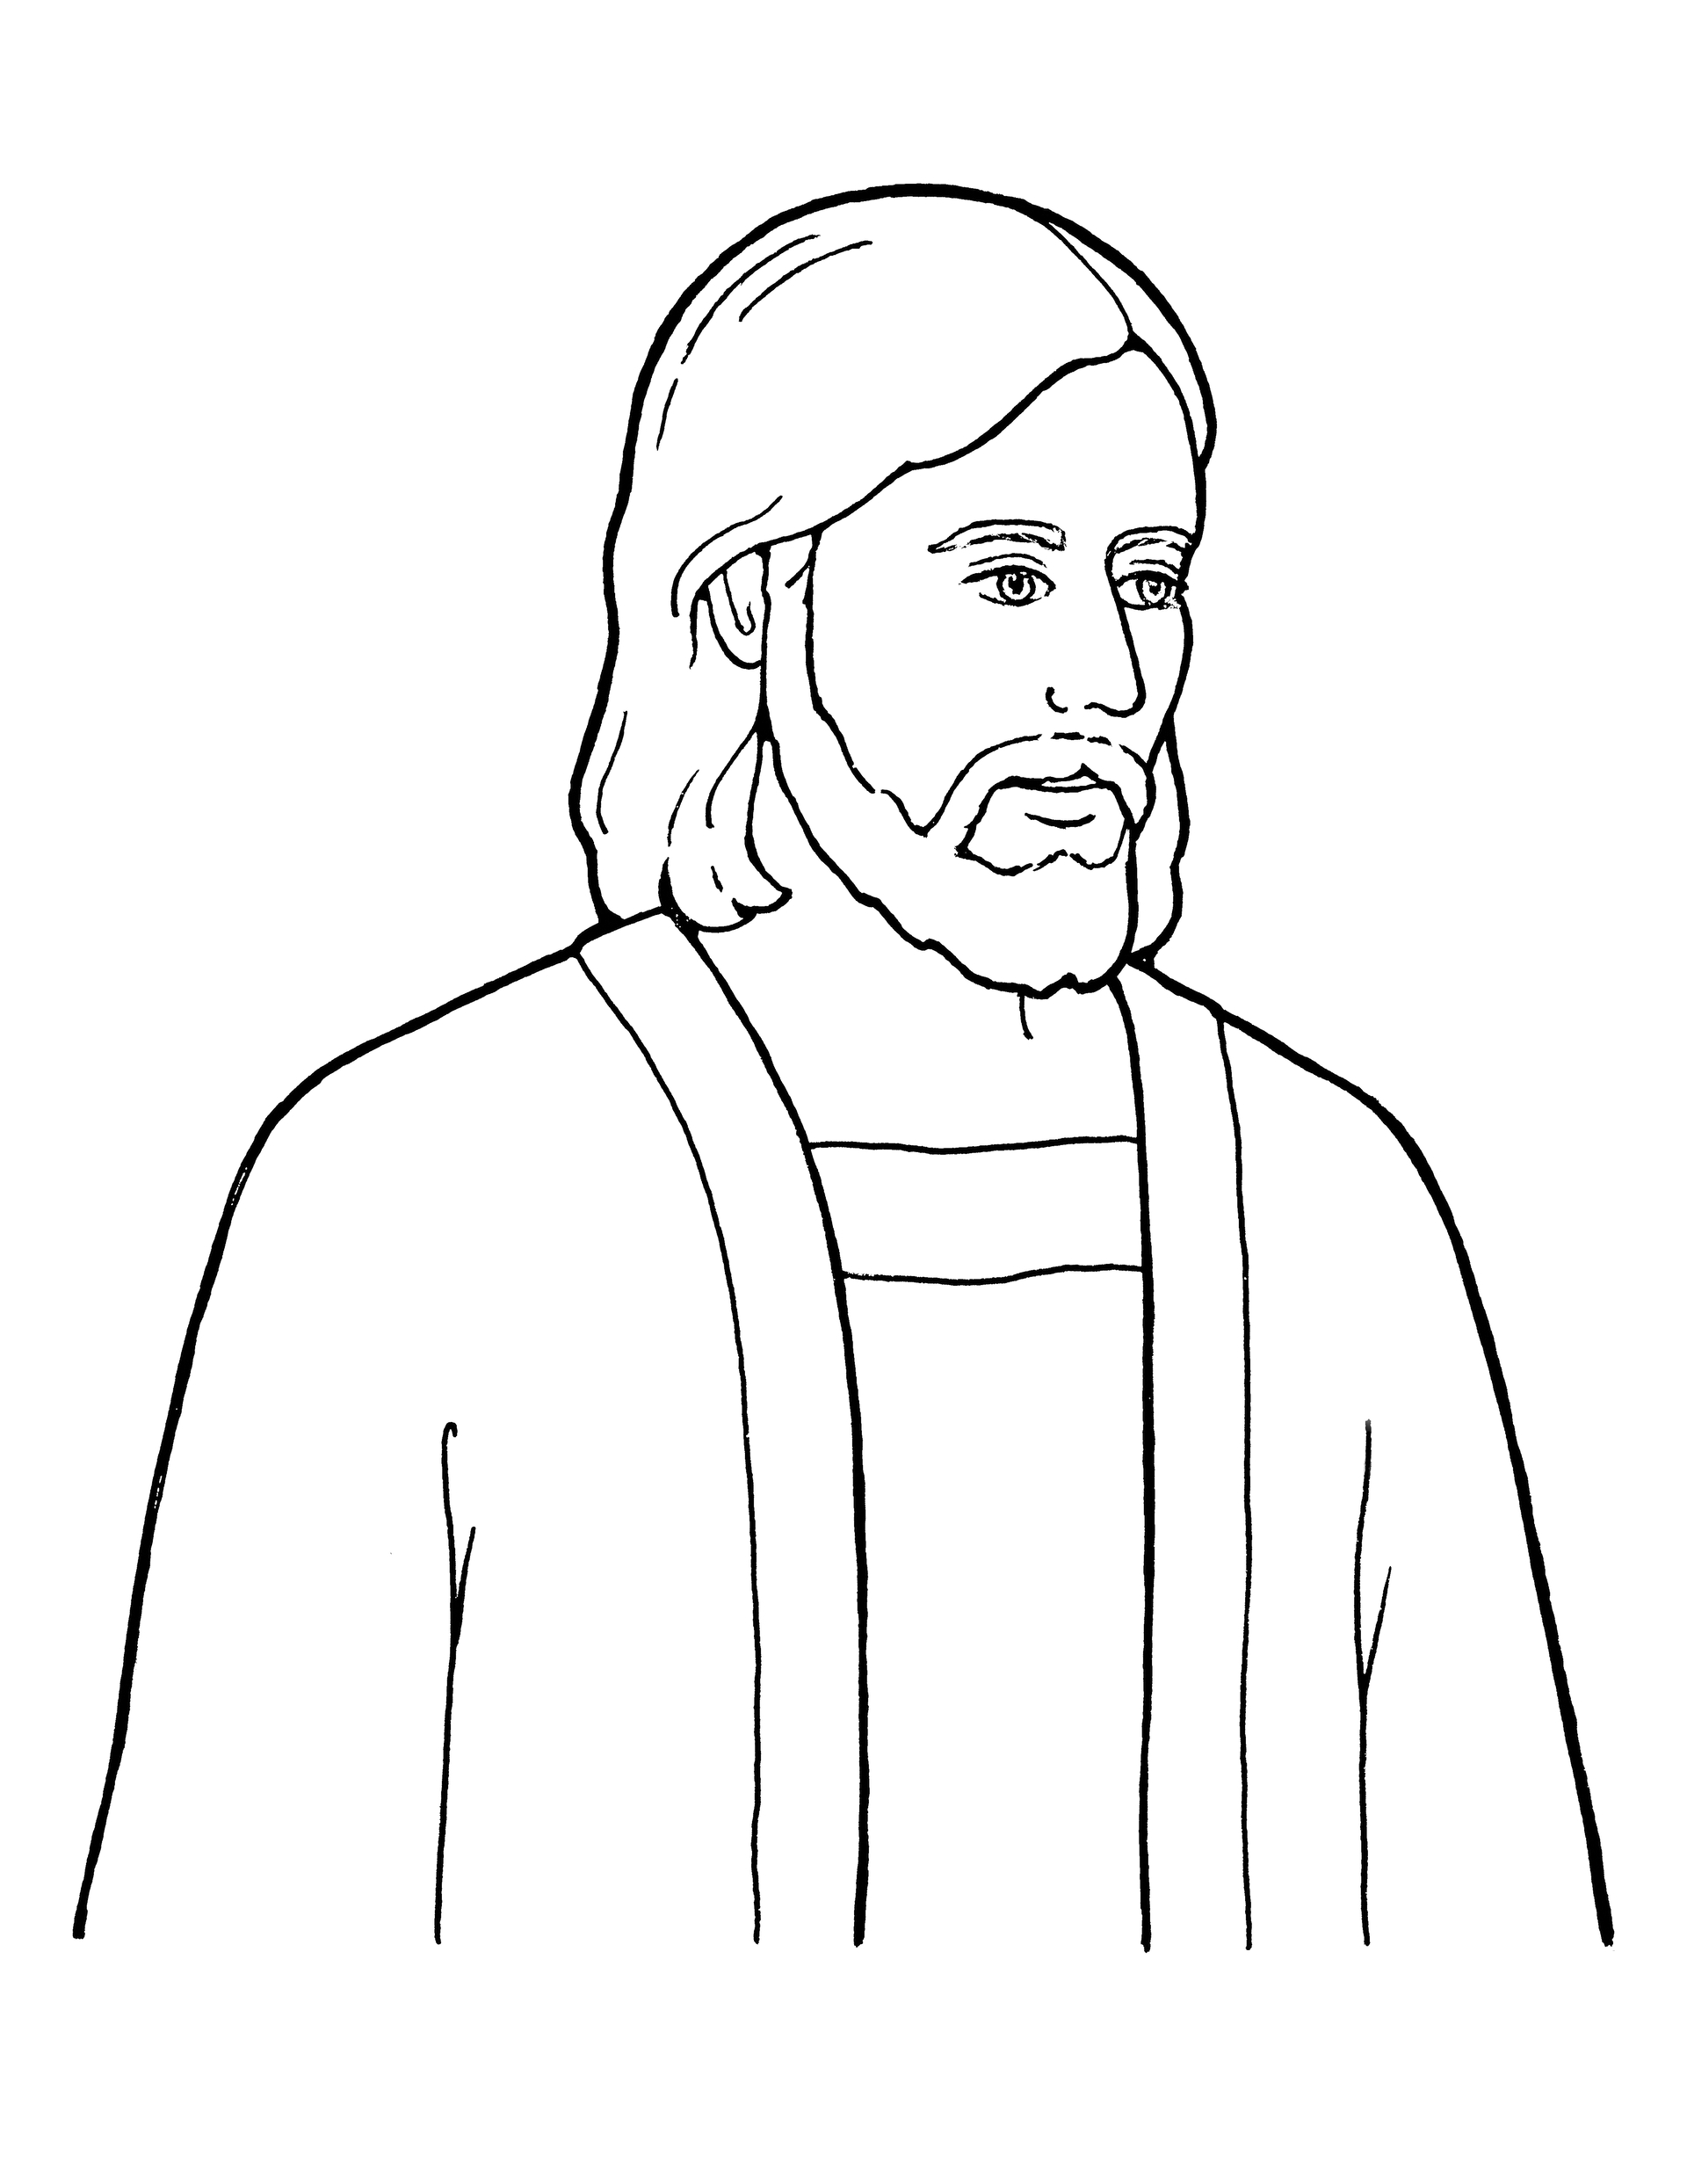 6500 Drawing Of Lord Jesus Christ Illustrations RoyaltyFree Vector  Graphics  Clip Art  iStock